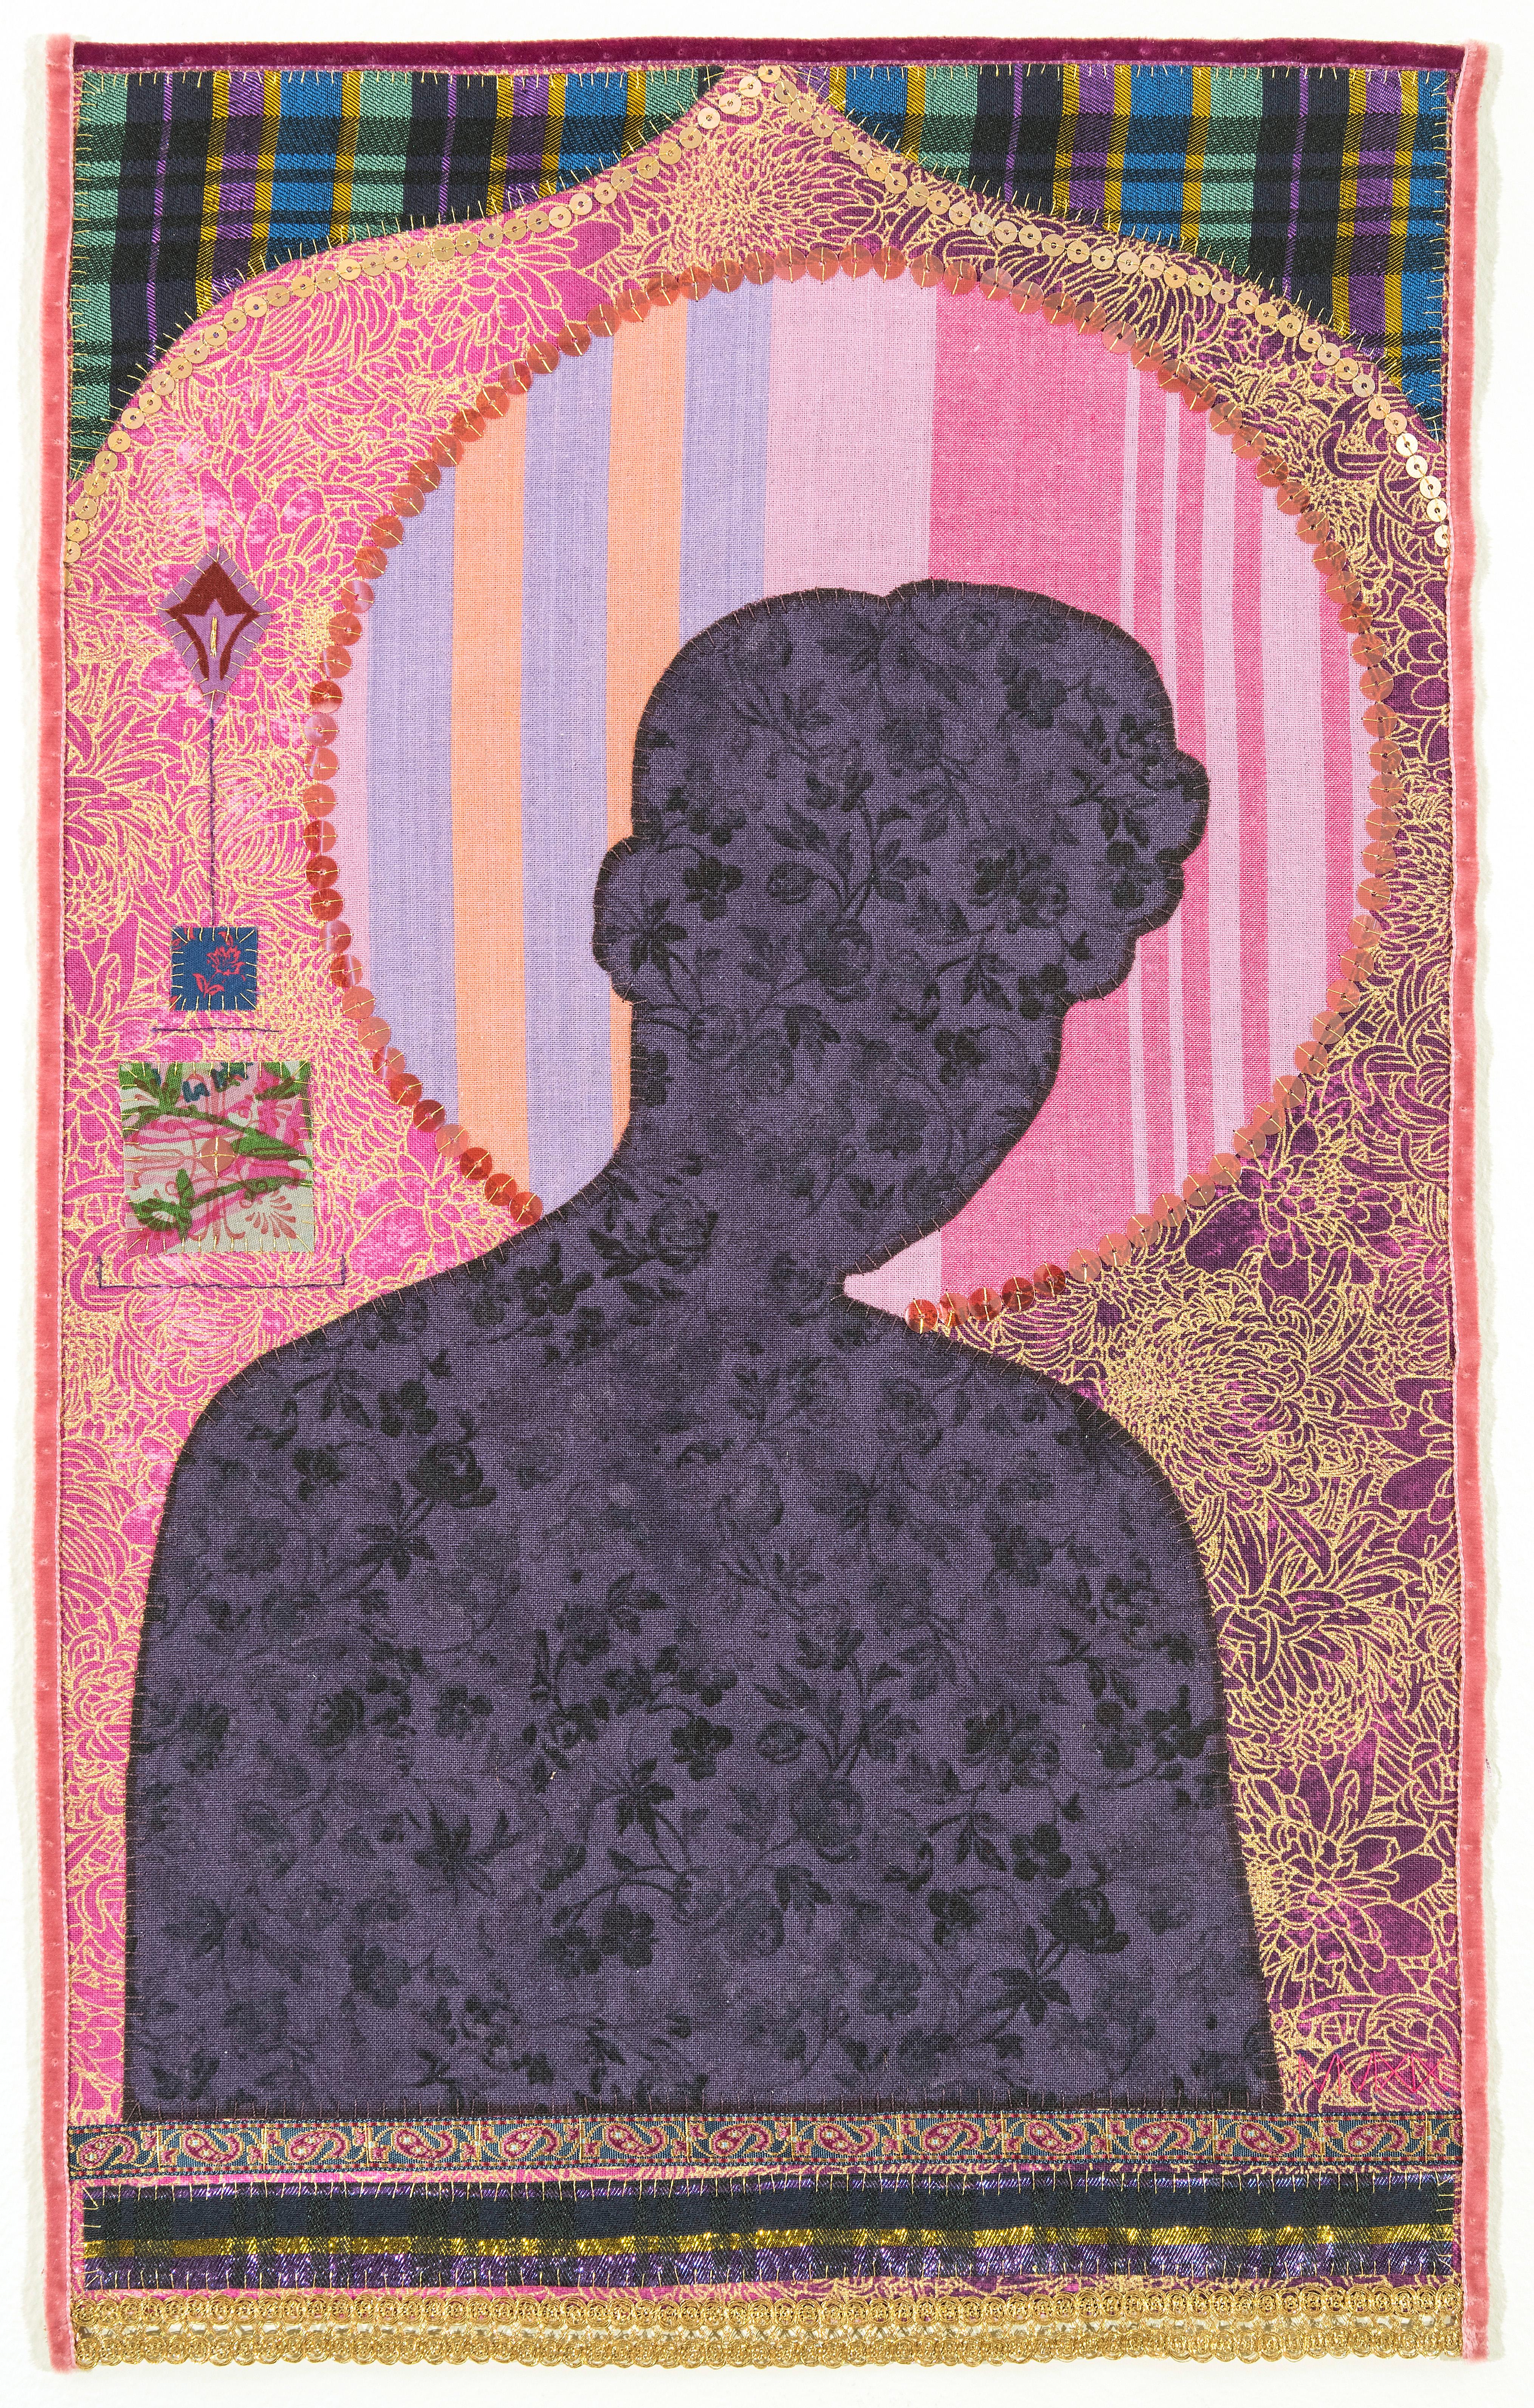 Jan Testori - Markman Figurative Sculpture - Untitled MM11, silhouette, pattern, textile, icon, purple, pink, gold